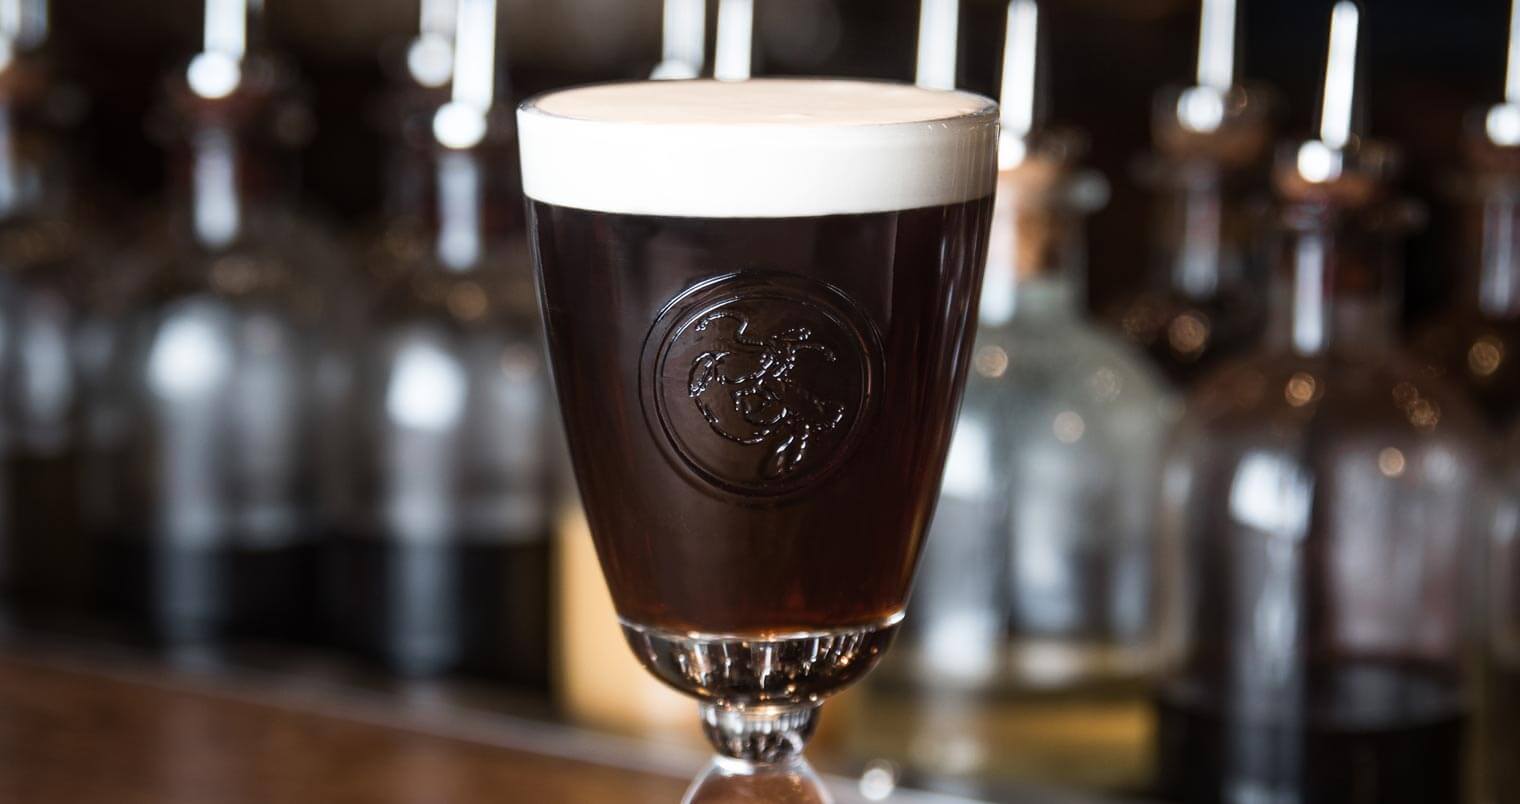 Dead Rabbit Irish Coffee, cocktail on wooden bartop, featured image